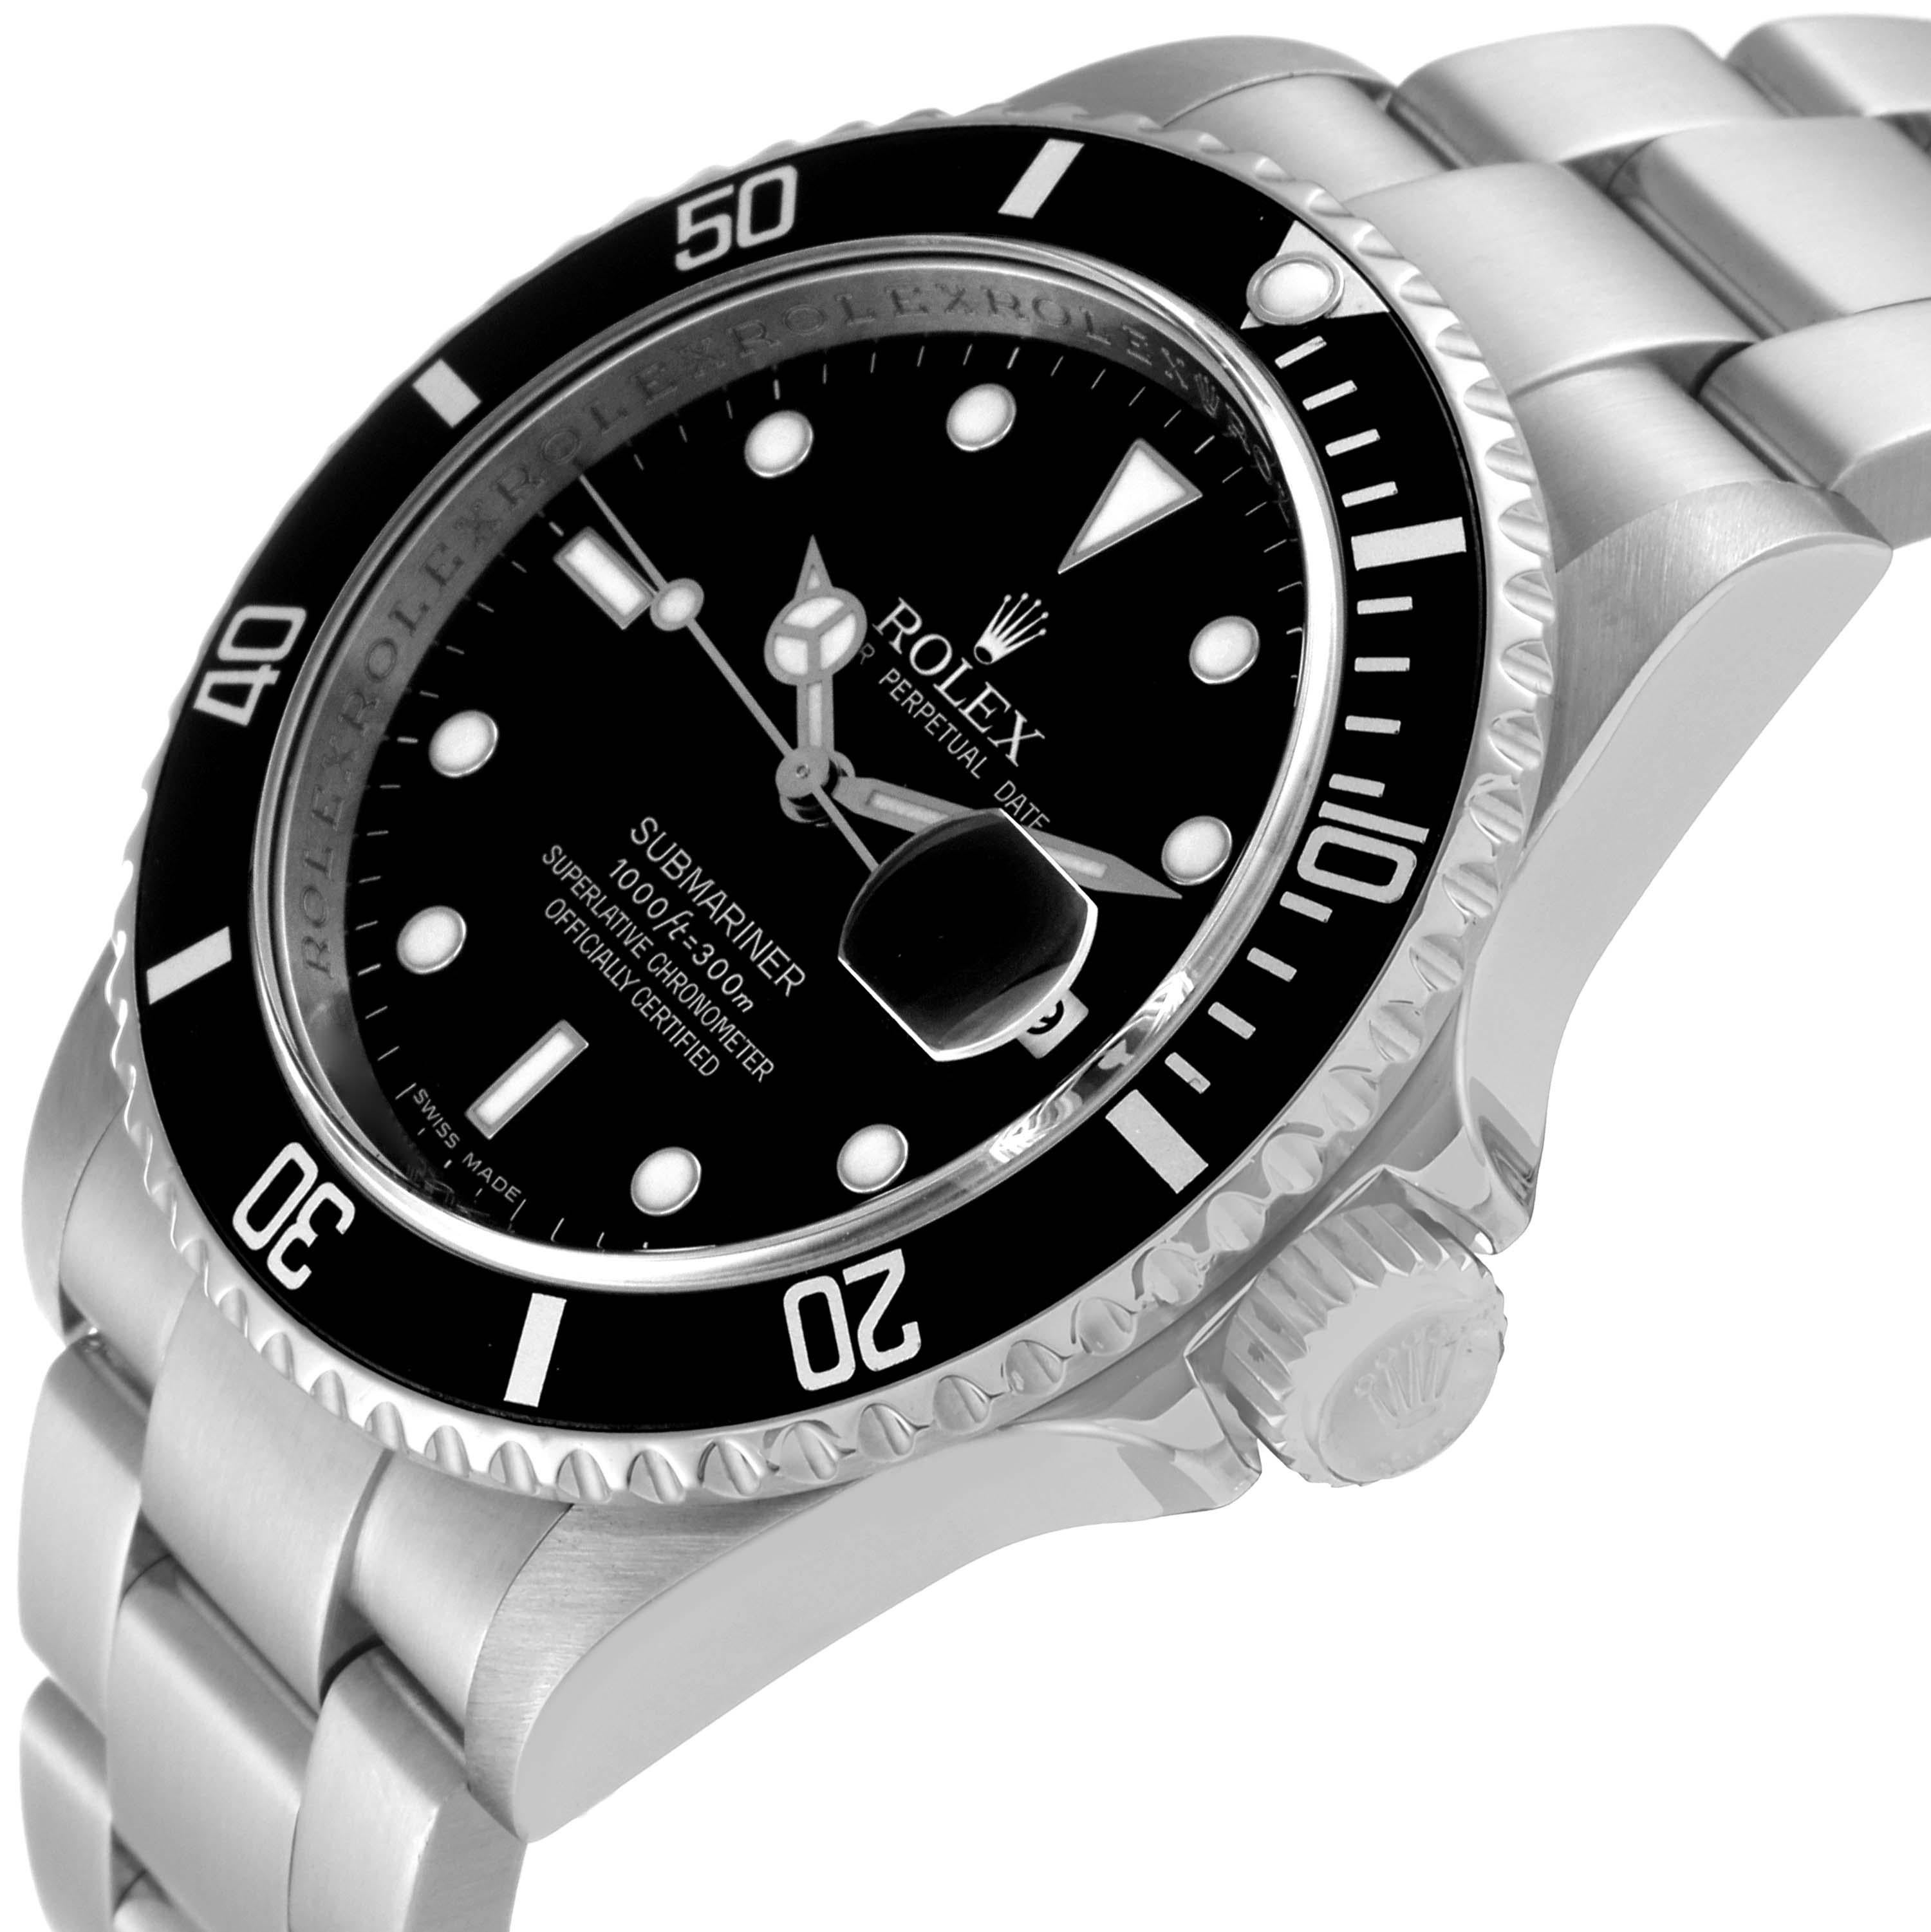 Rolex Submariner Date Black Dial Steel Mens Watch 16610 1